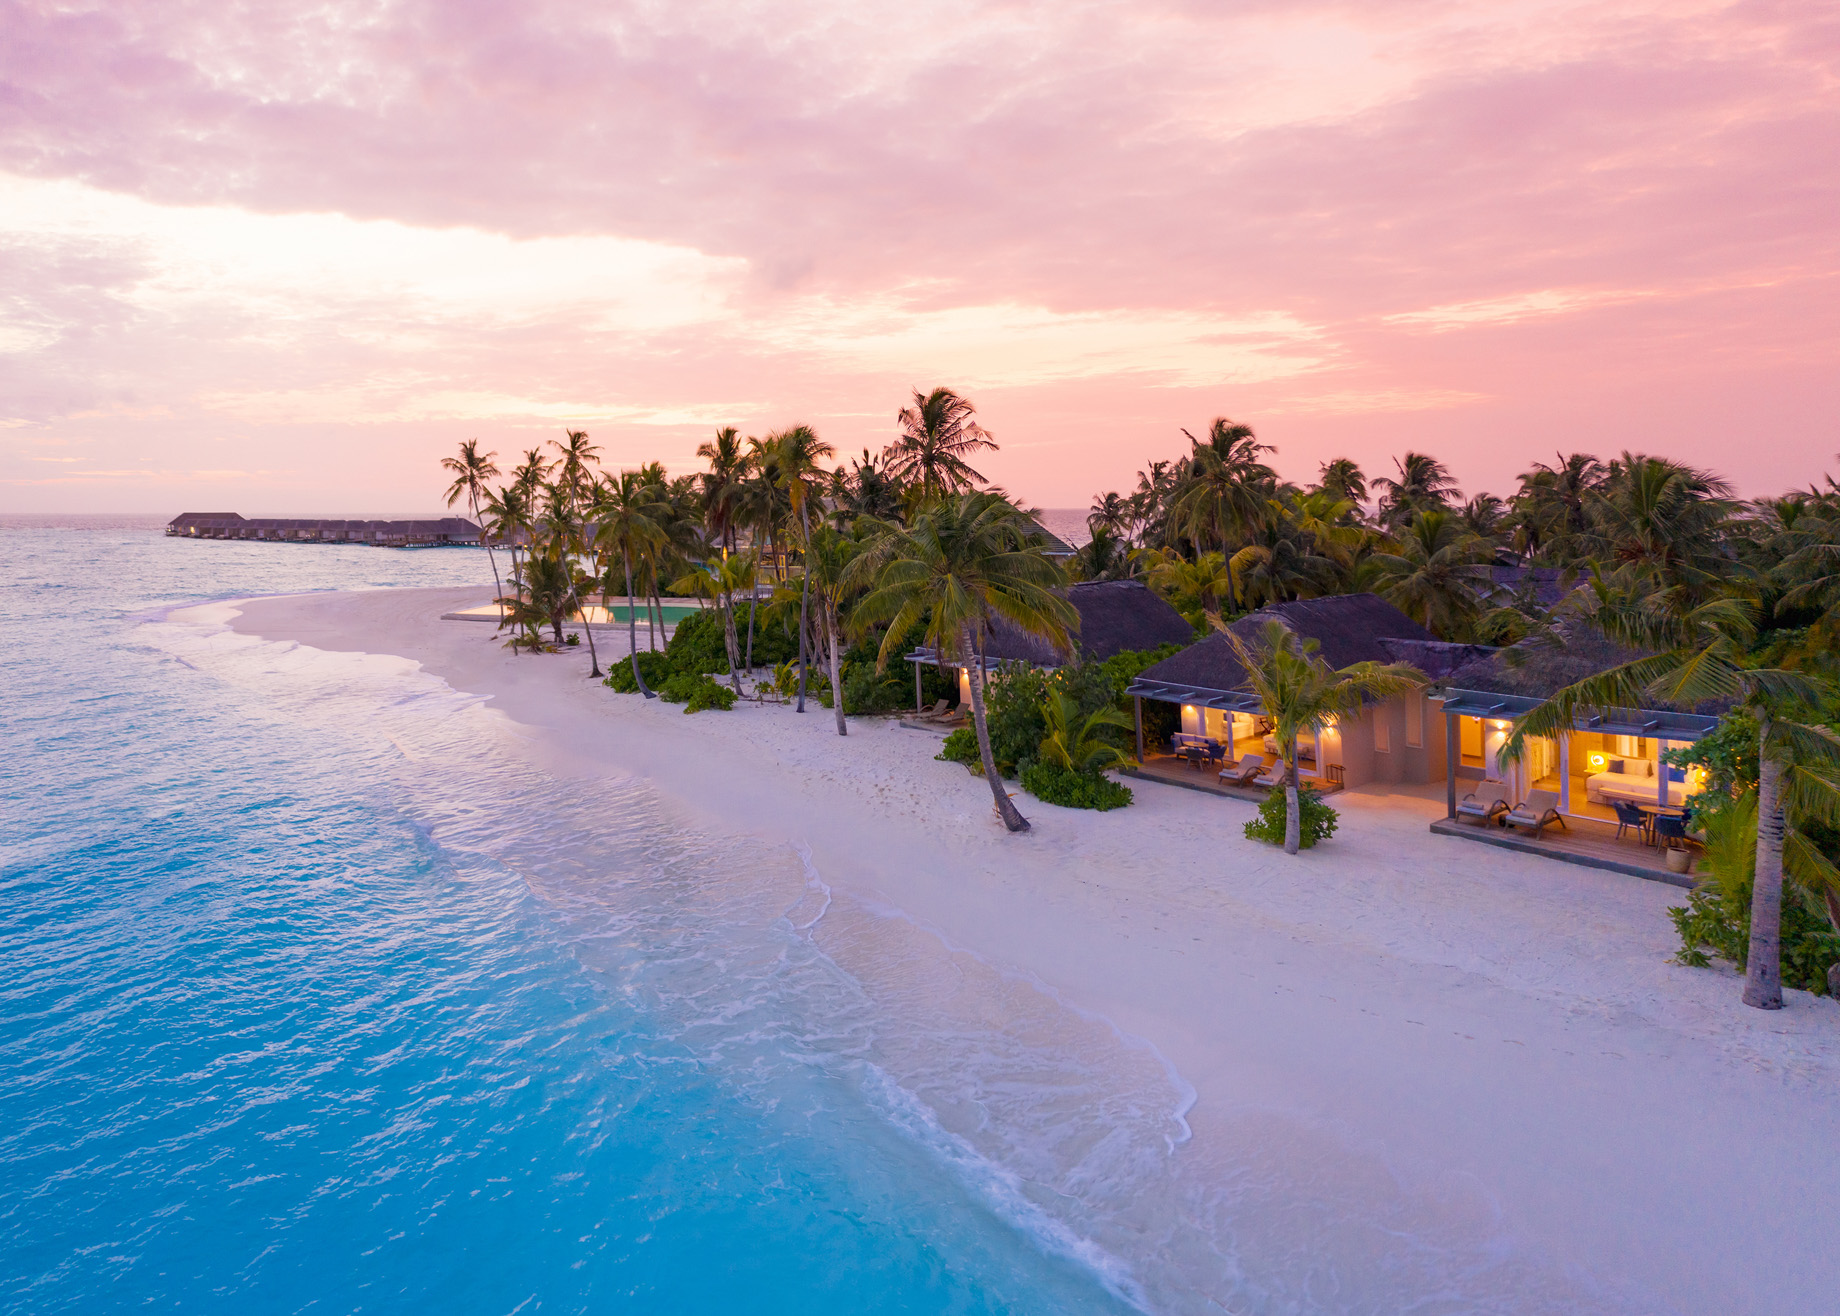 Baglioni Resort Maldives – Maagau Island, Rinbudhoo, Maldives – Beach Villas Aerial View Sunset